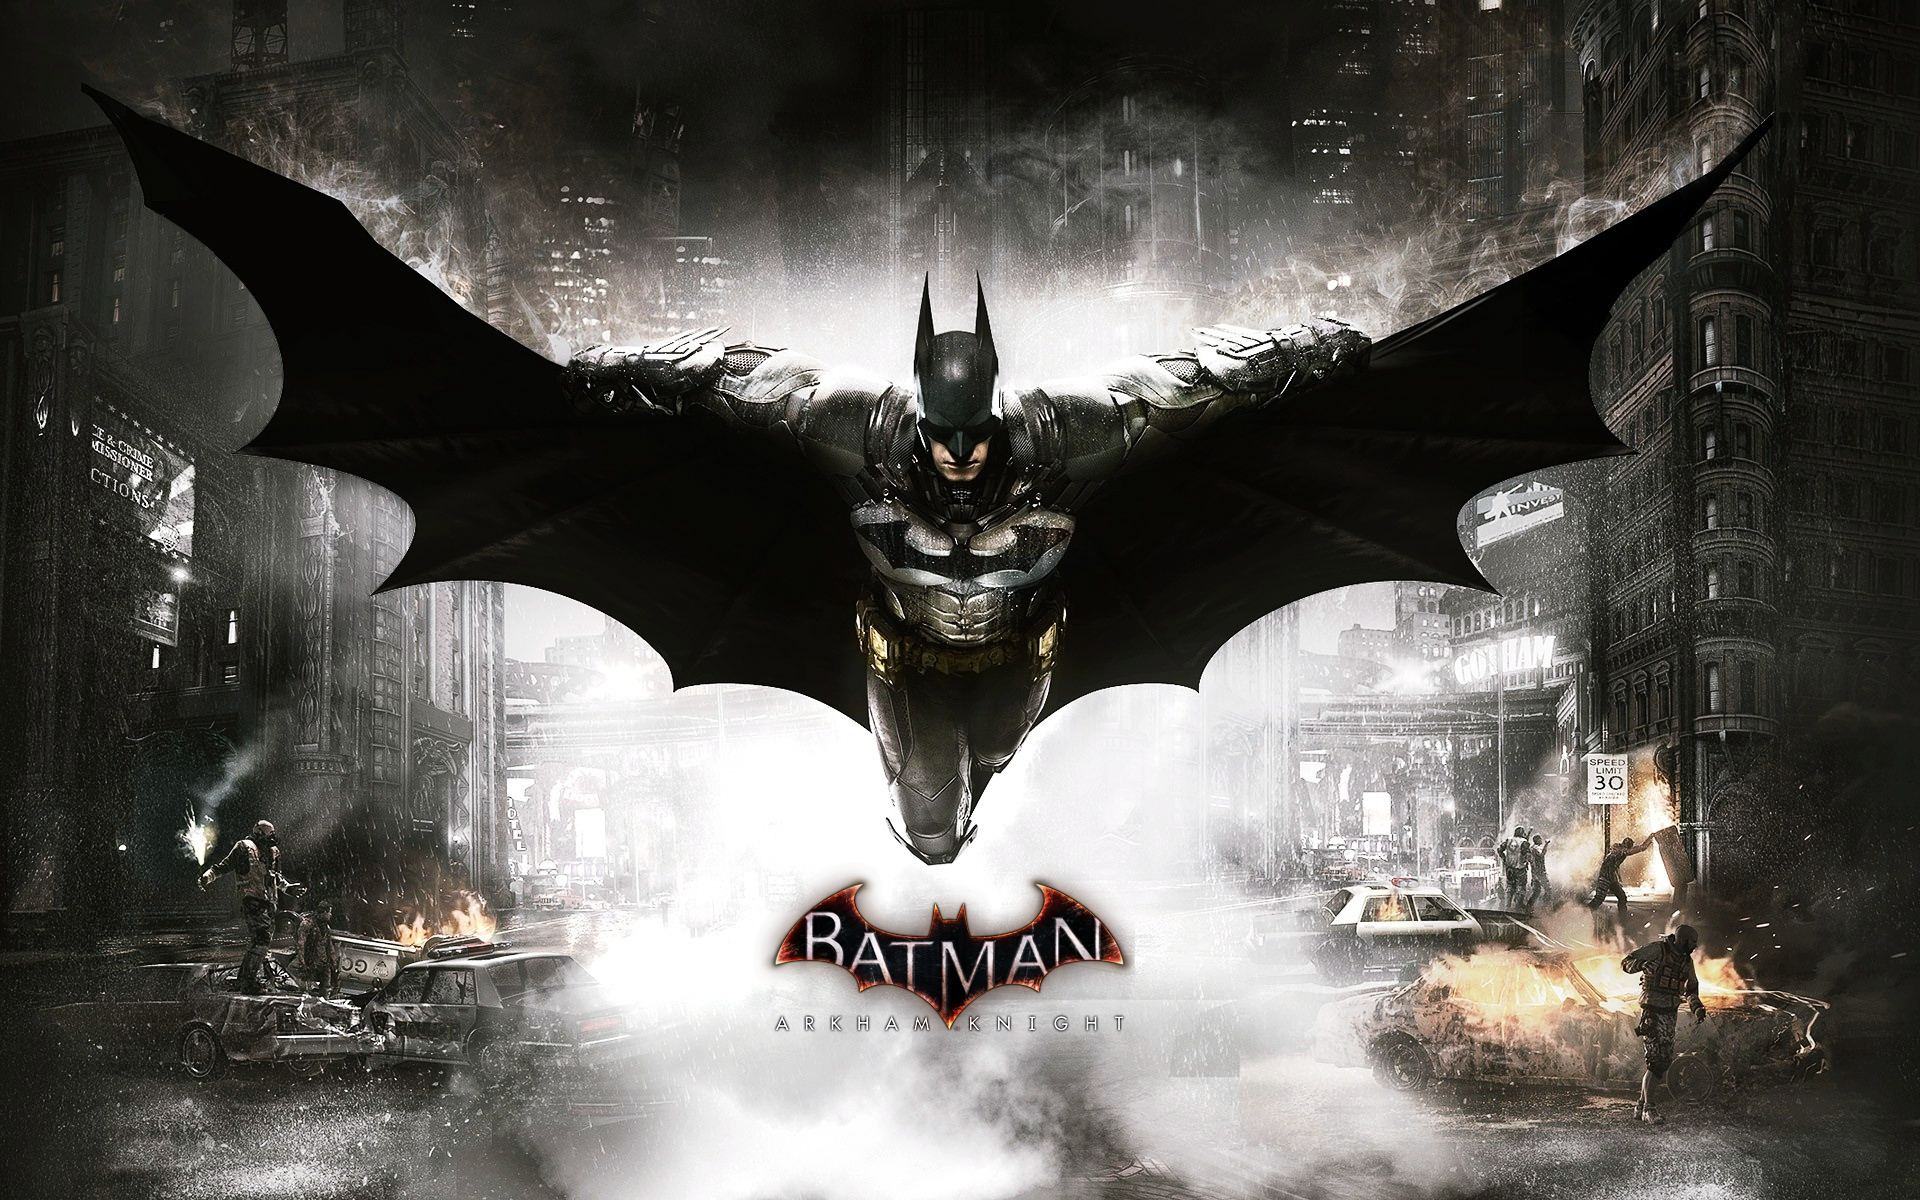 Batman-Arkham-Knight-Game-Poster-Wallpaper.jpg